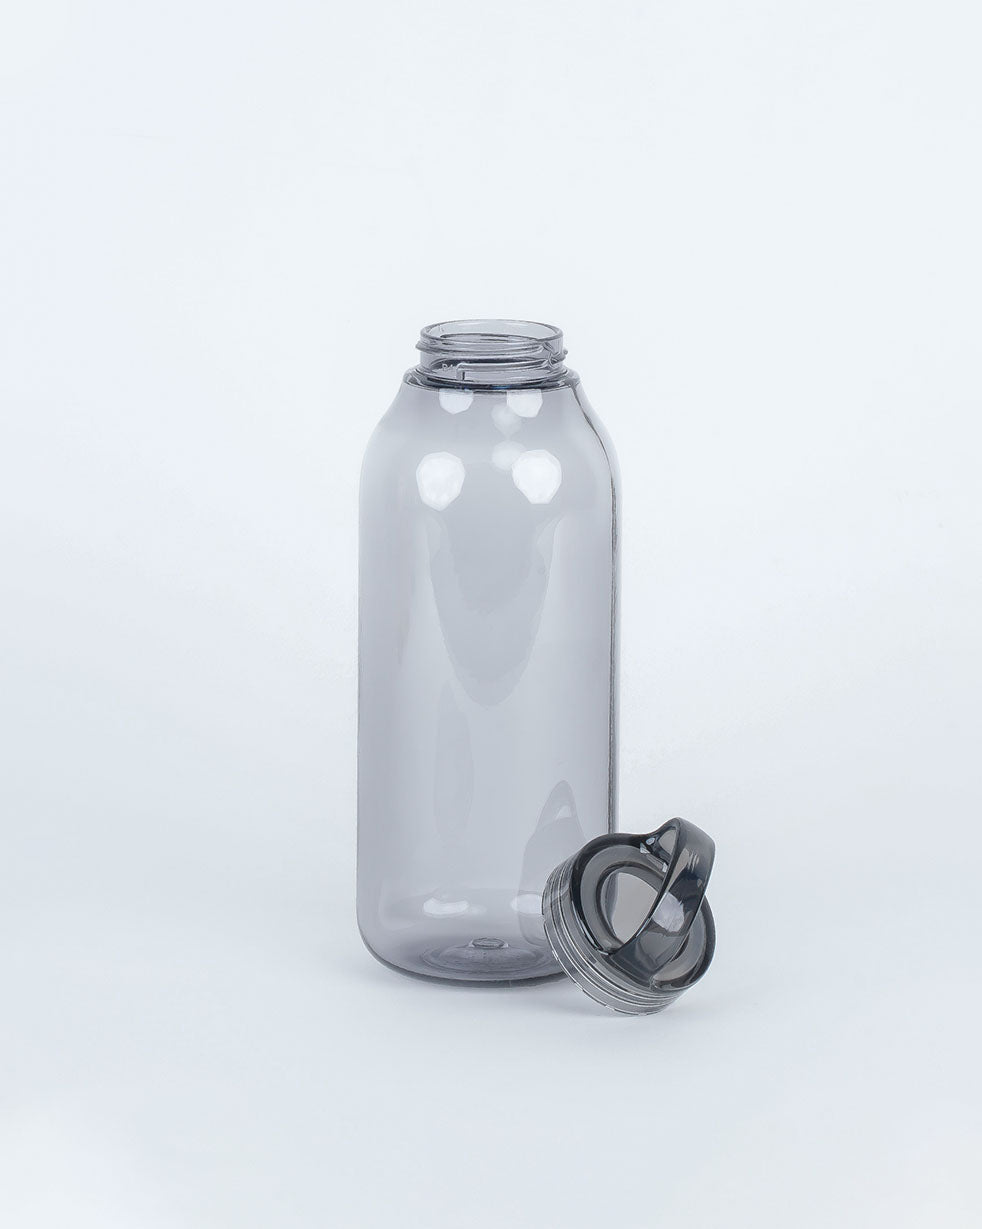 KINTO Water Bottle (500ml/17oz) – Varyer Shop